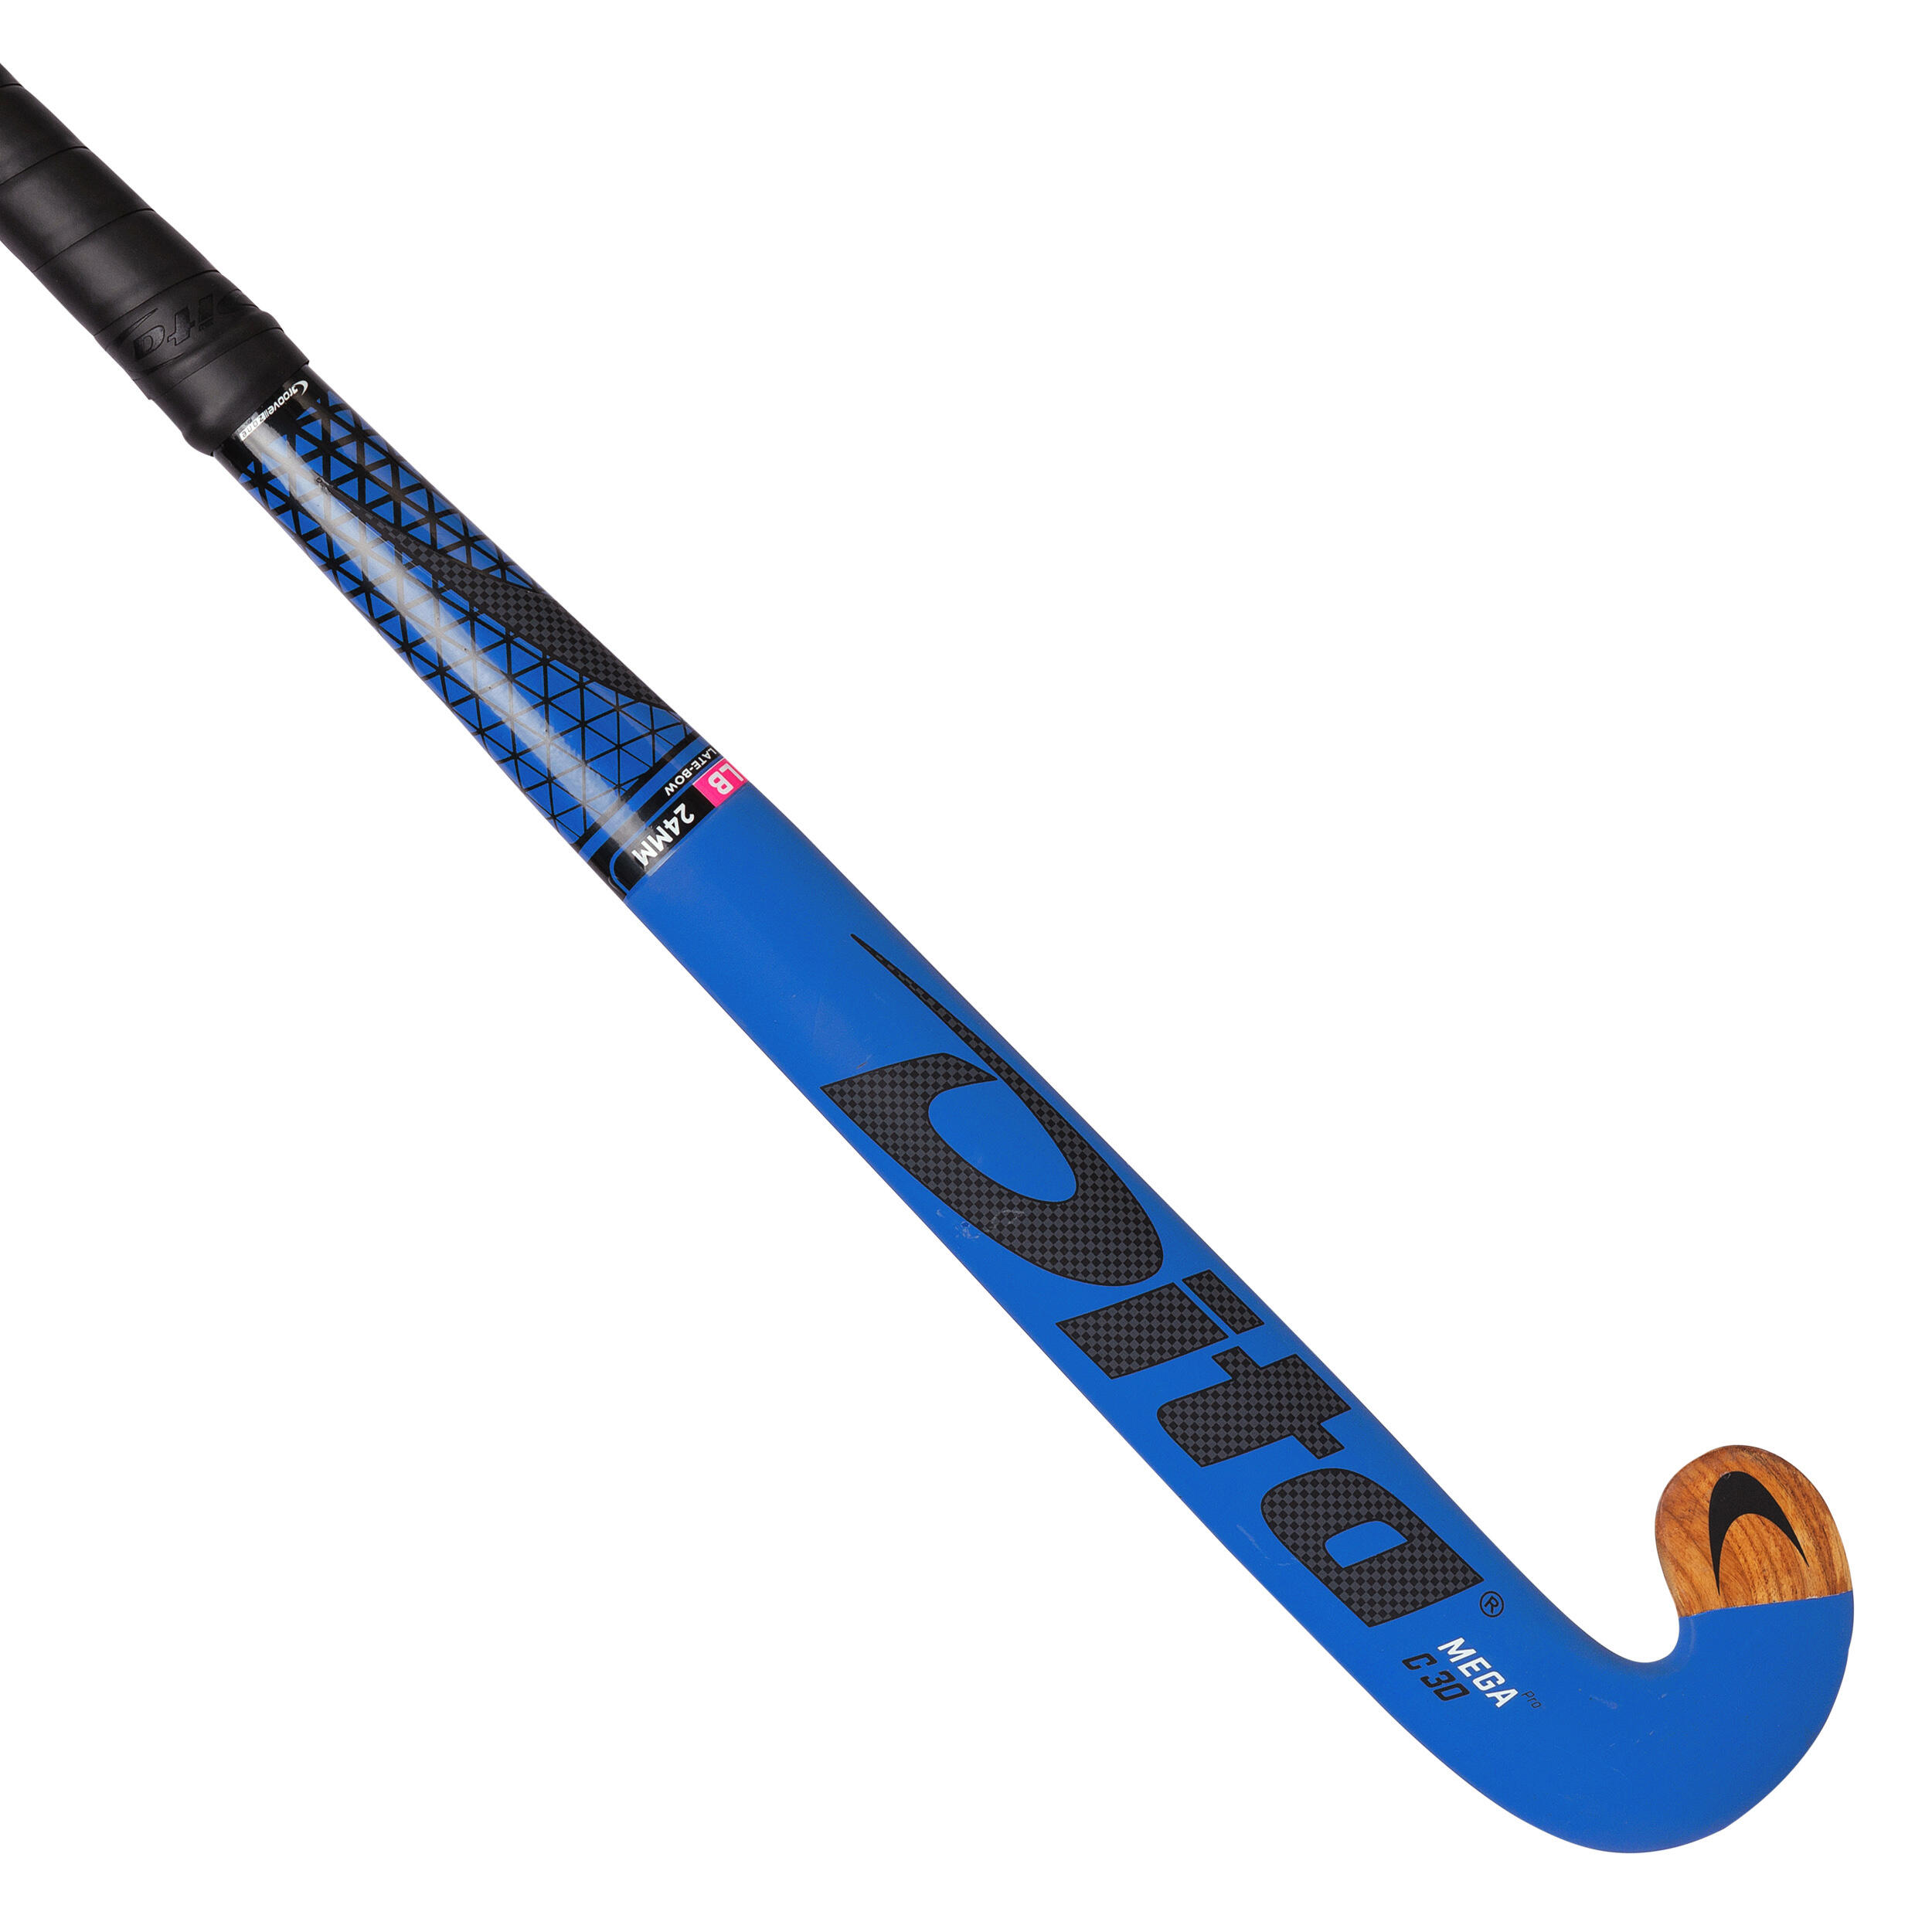 DITA Adult Low Bow Stick Dita Indoor Megapro Wood C30 - Blue